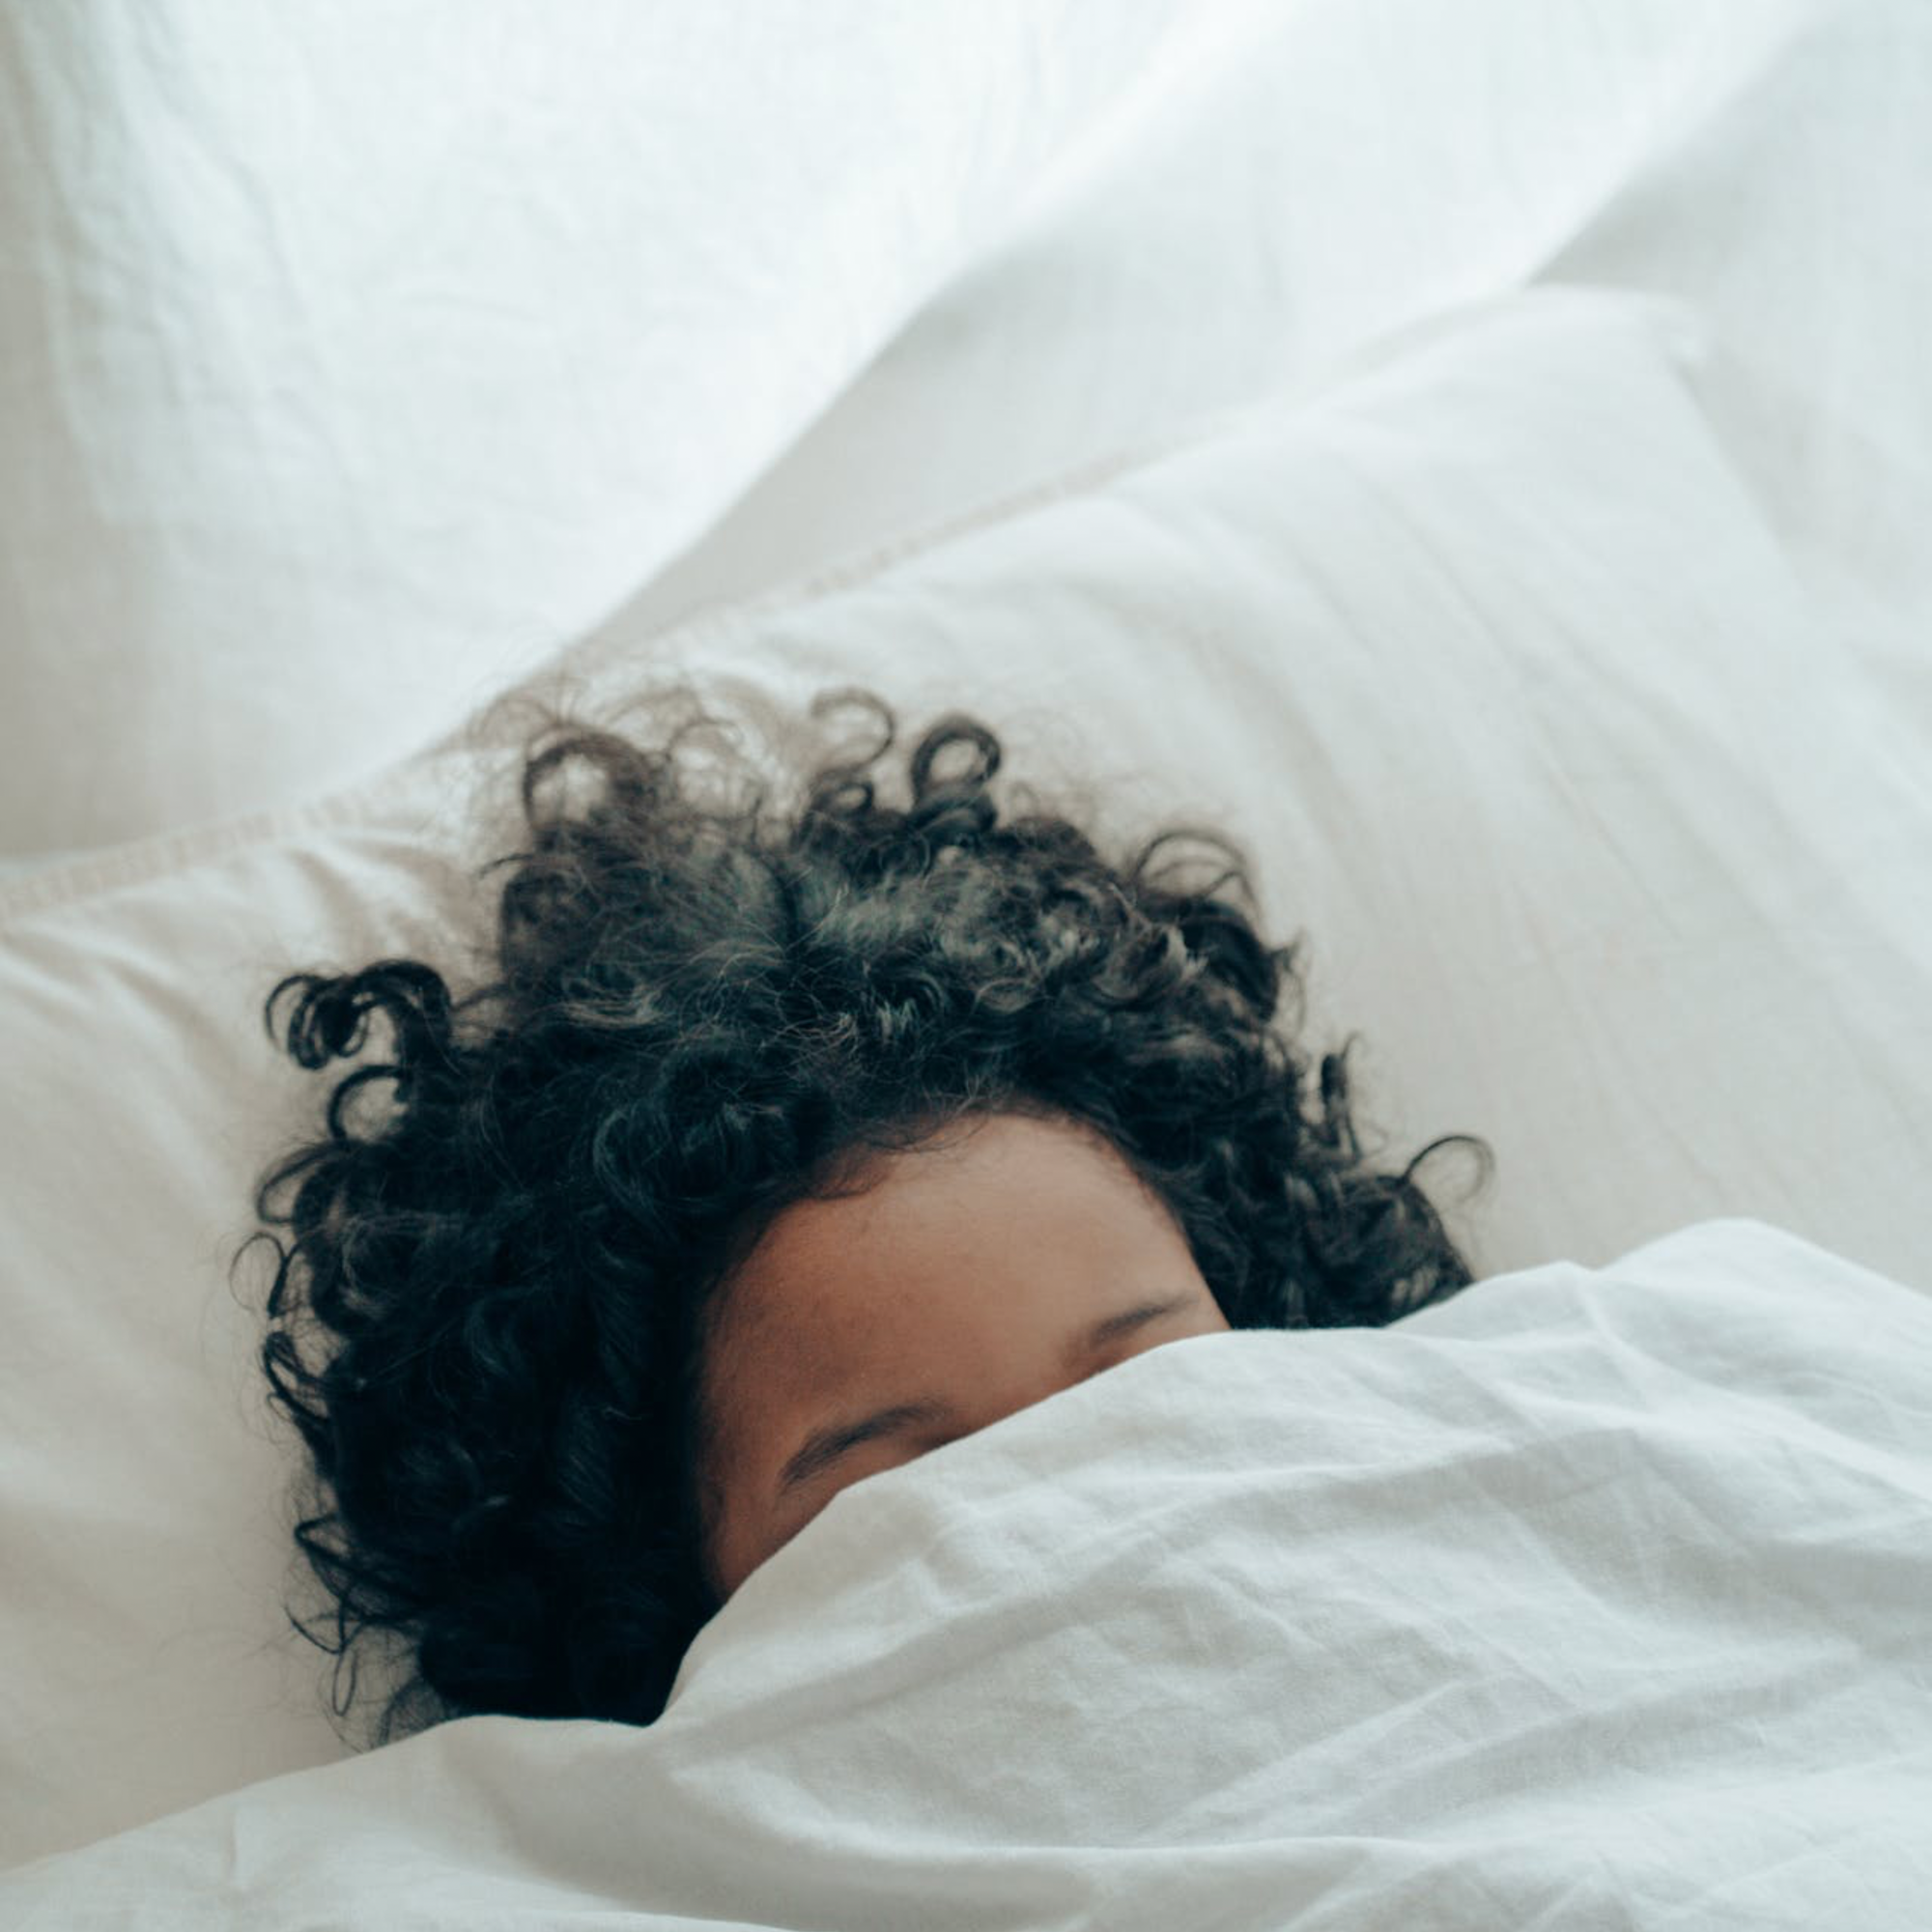 Improve your sleep quality with CBD